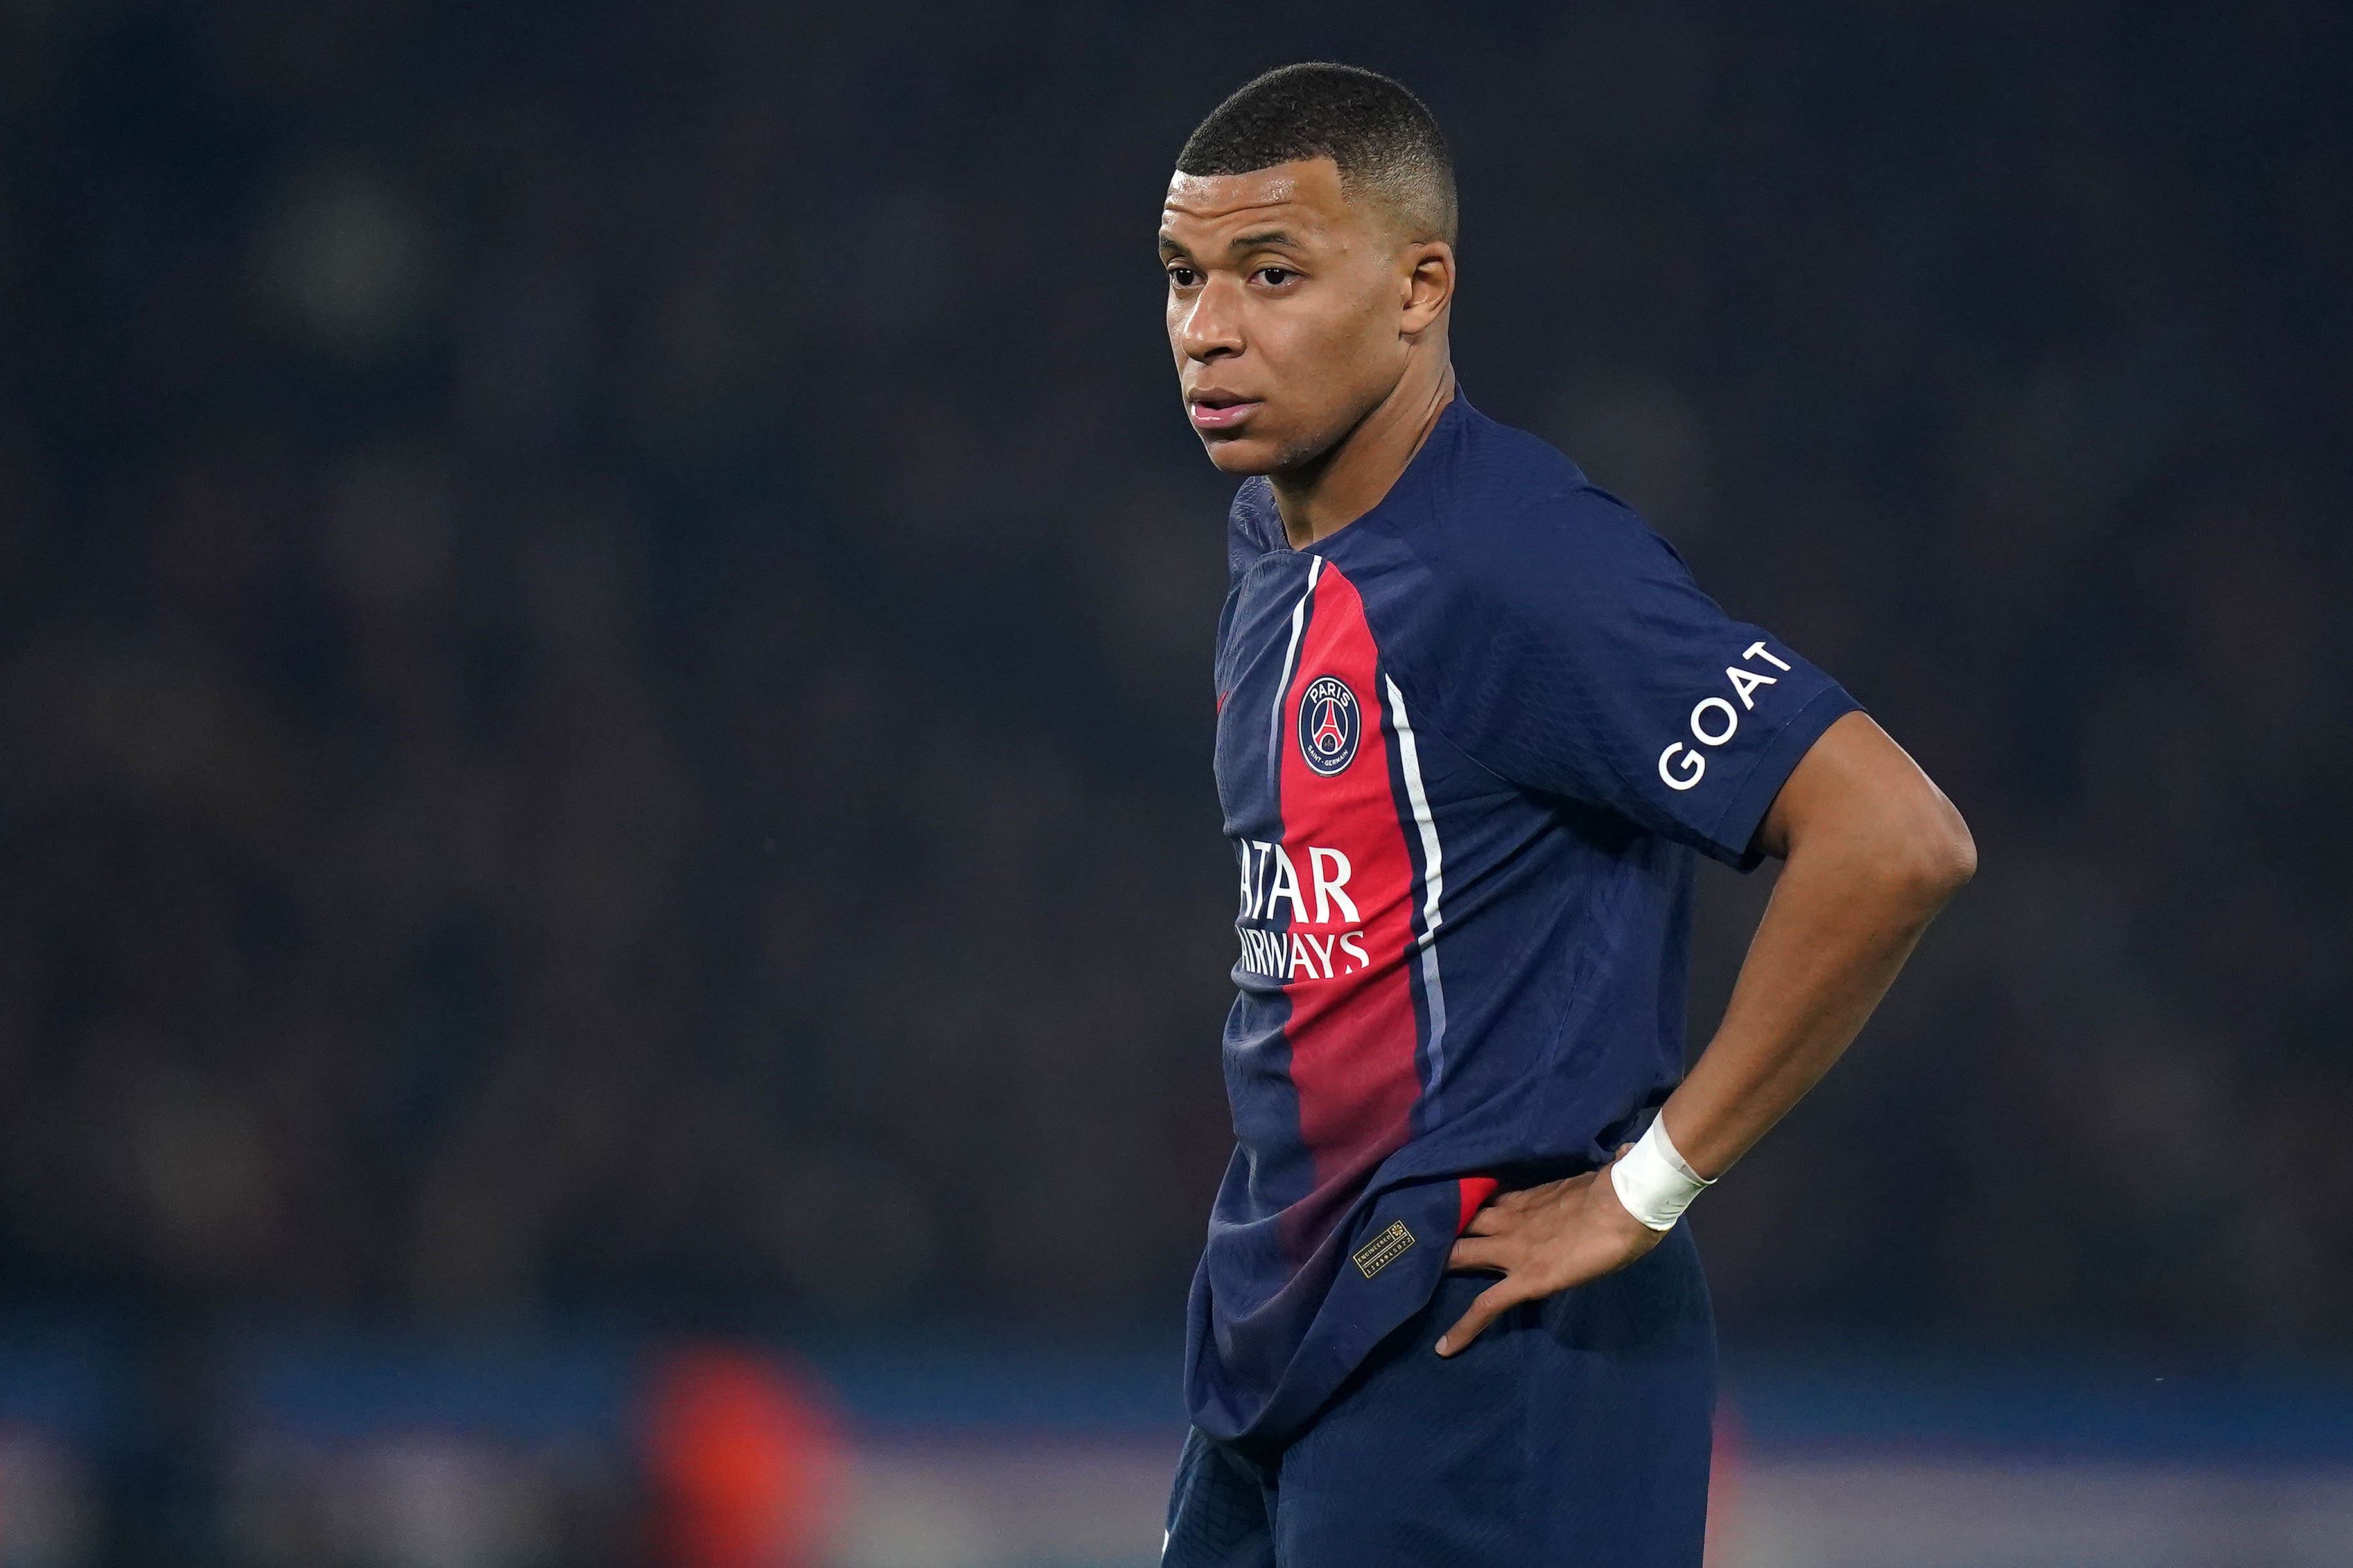 Kylian Mbappe has confirmed he will leave Paris St Germain